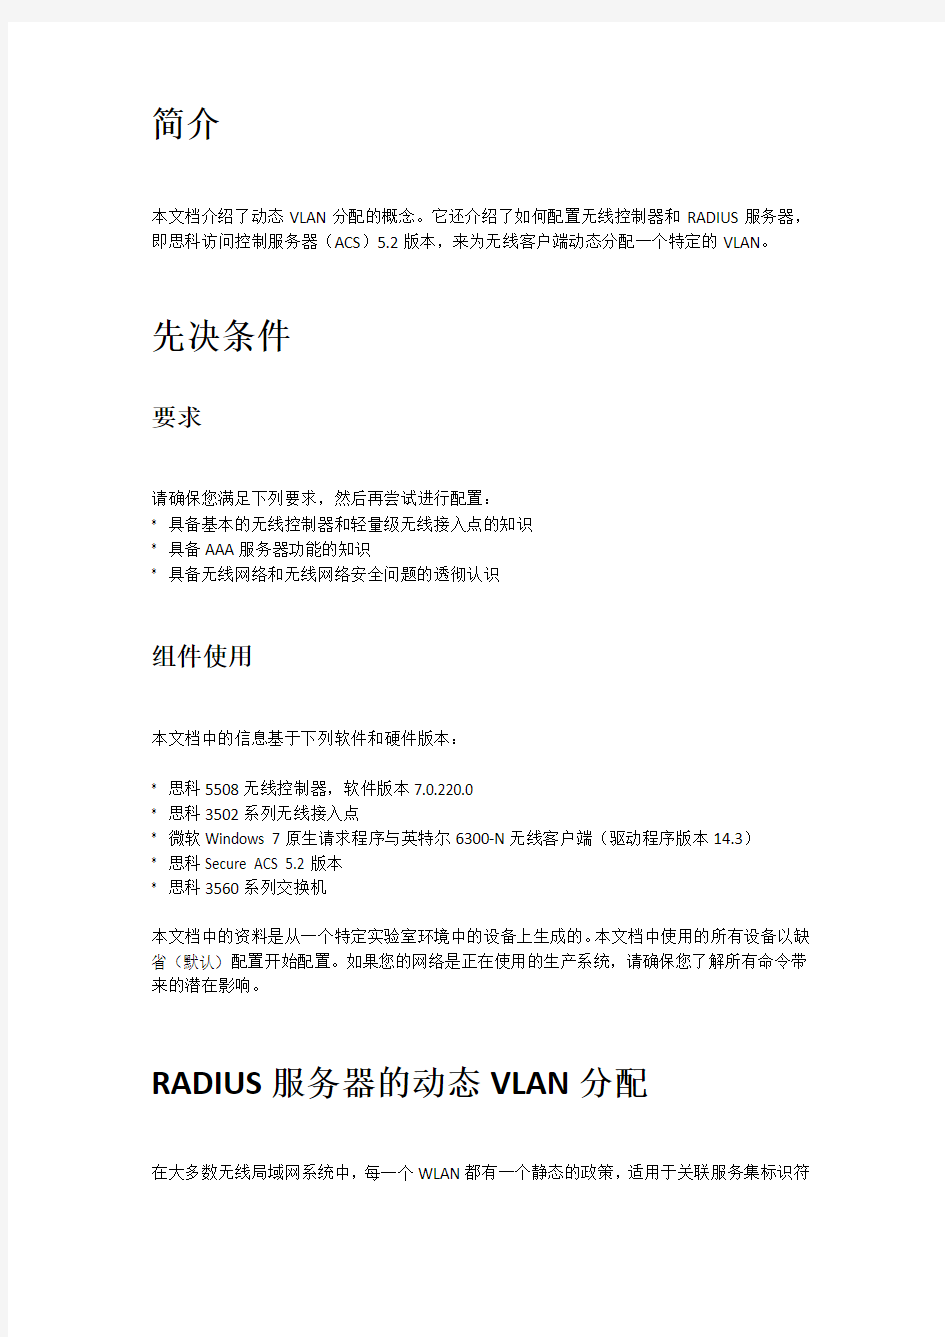 RADIUS服务器ACS 5.2和无线控制器动态VLAN分配配置举例